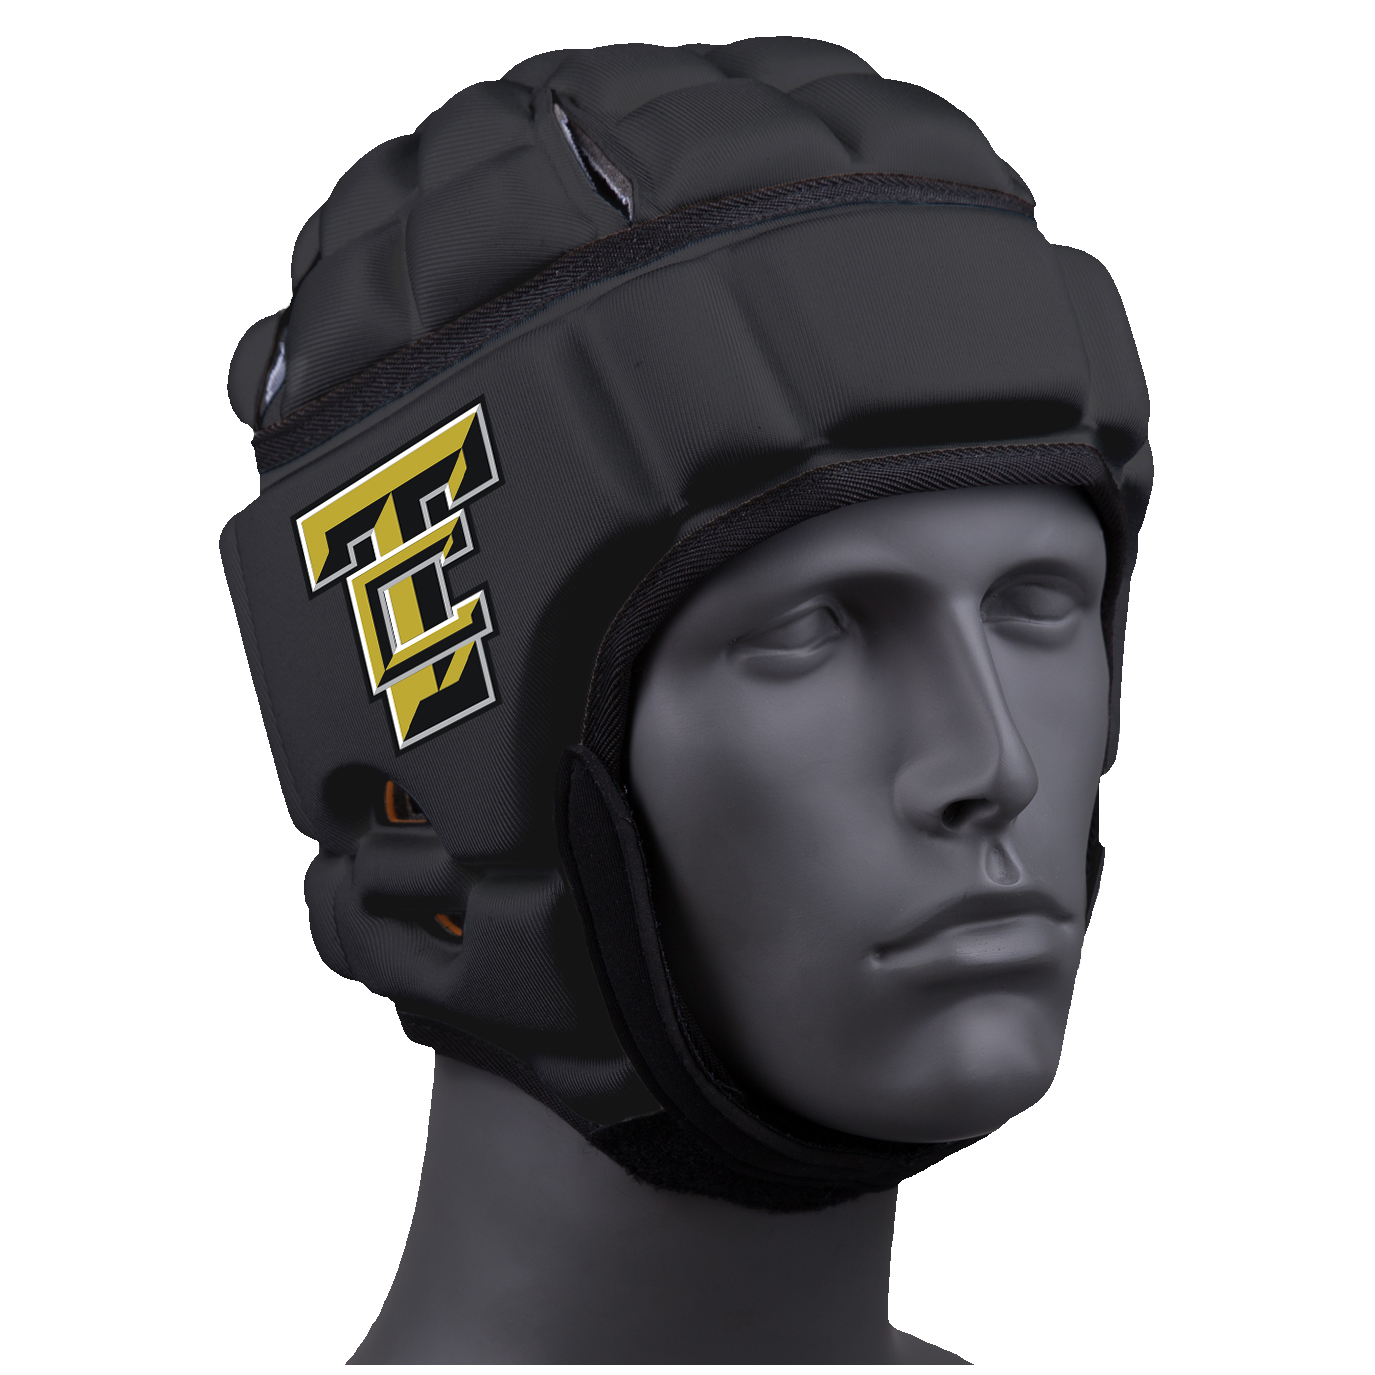 Protector Guard Wrestling Helmet Cap Head Gear Boxing MMA Rugby Scrum Hockey 7v7 